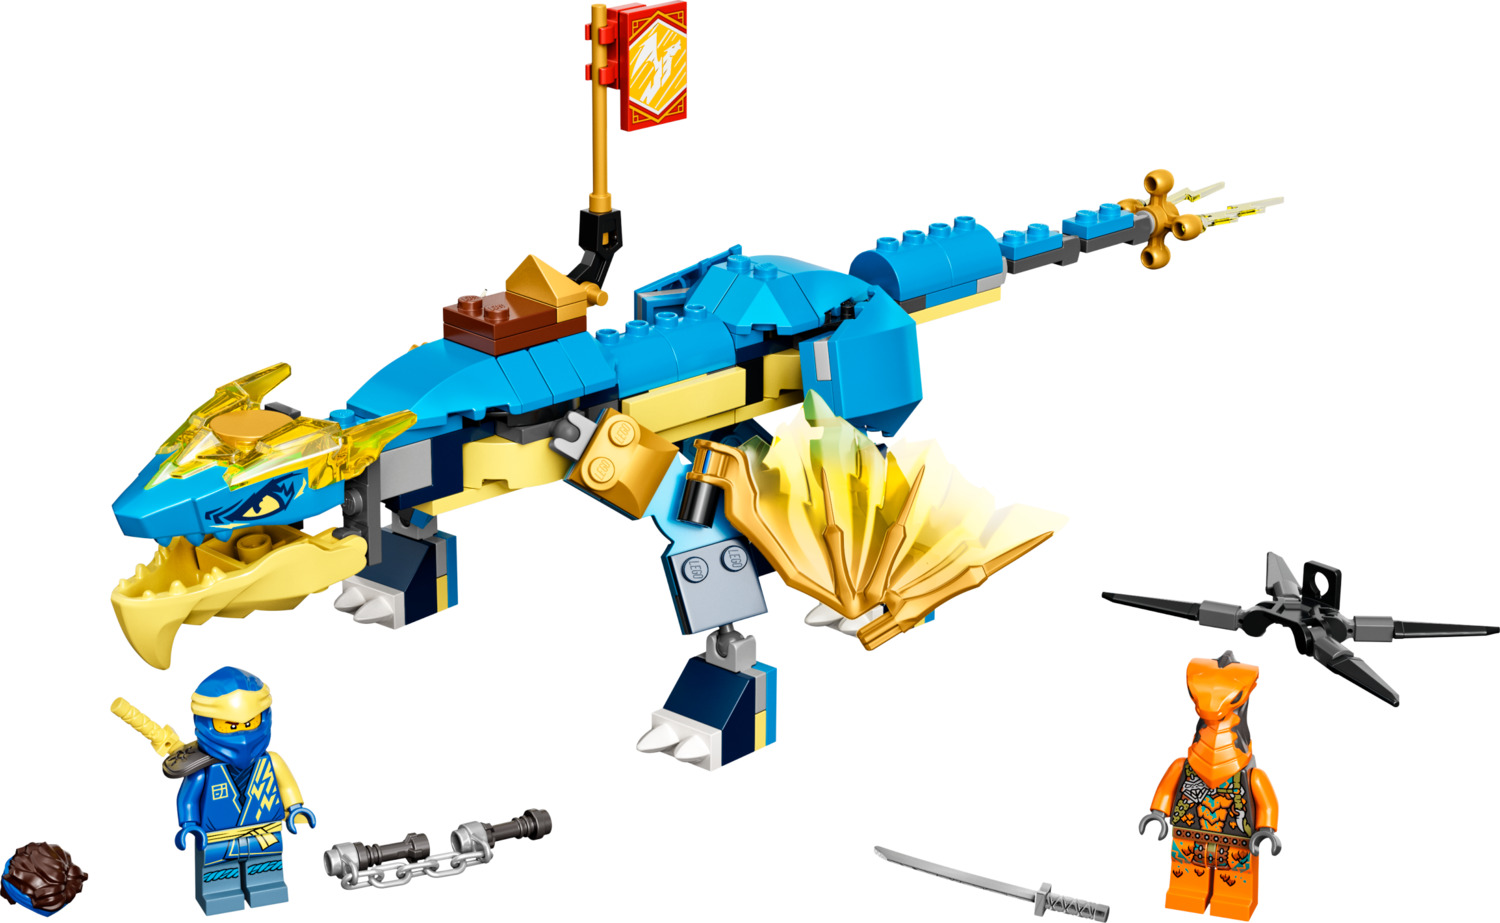 LEGO NINJAGO: Jay's Thunder Dragon EVO